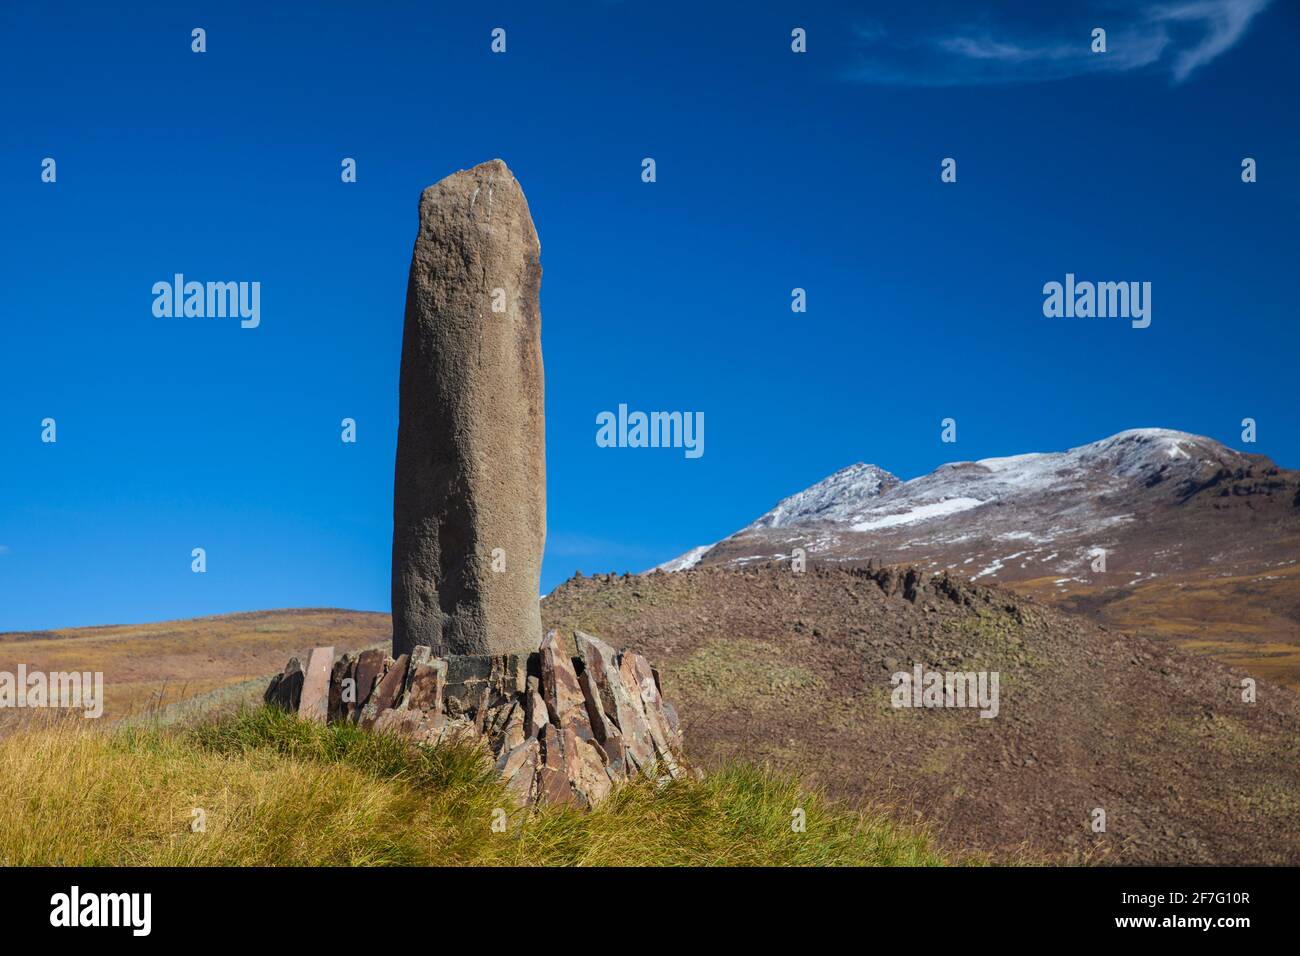 Armenia, Aragatsotn, Phallic stone at Kari Lake situated at the base of Mount Aragats Stock Photo